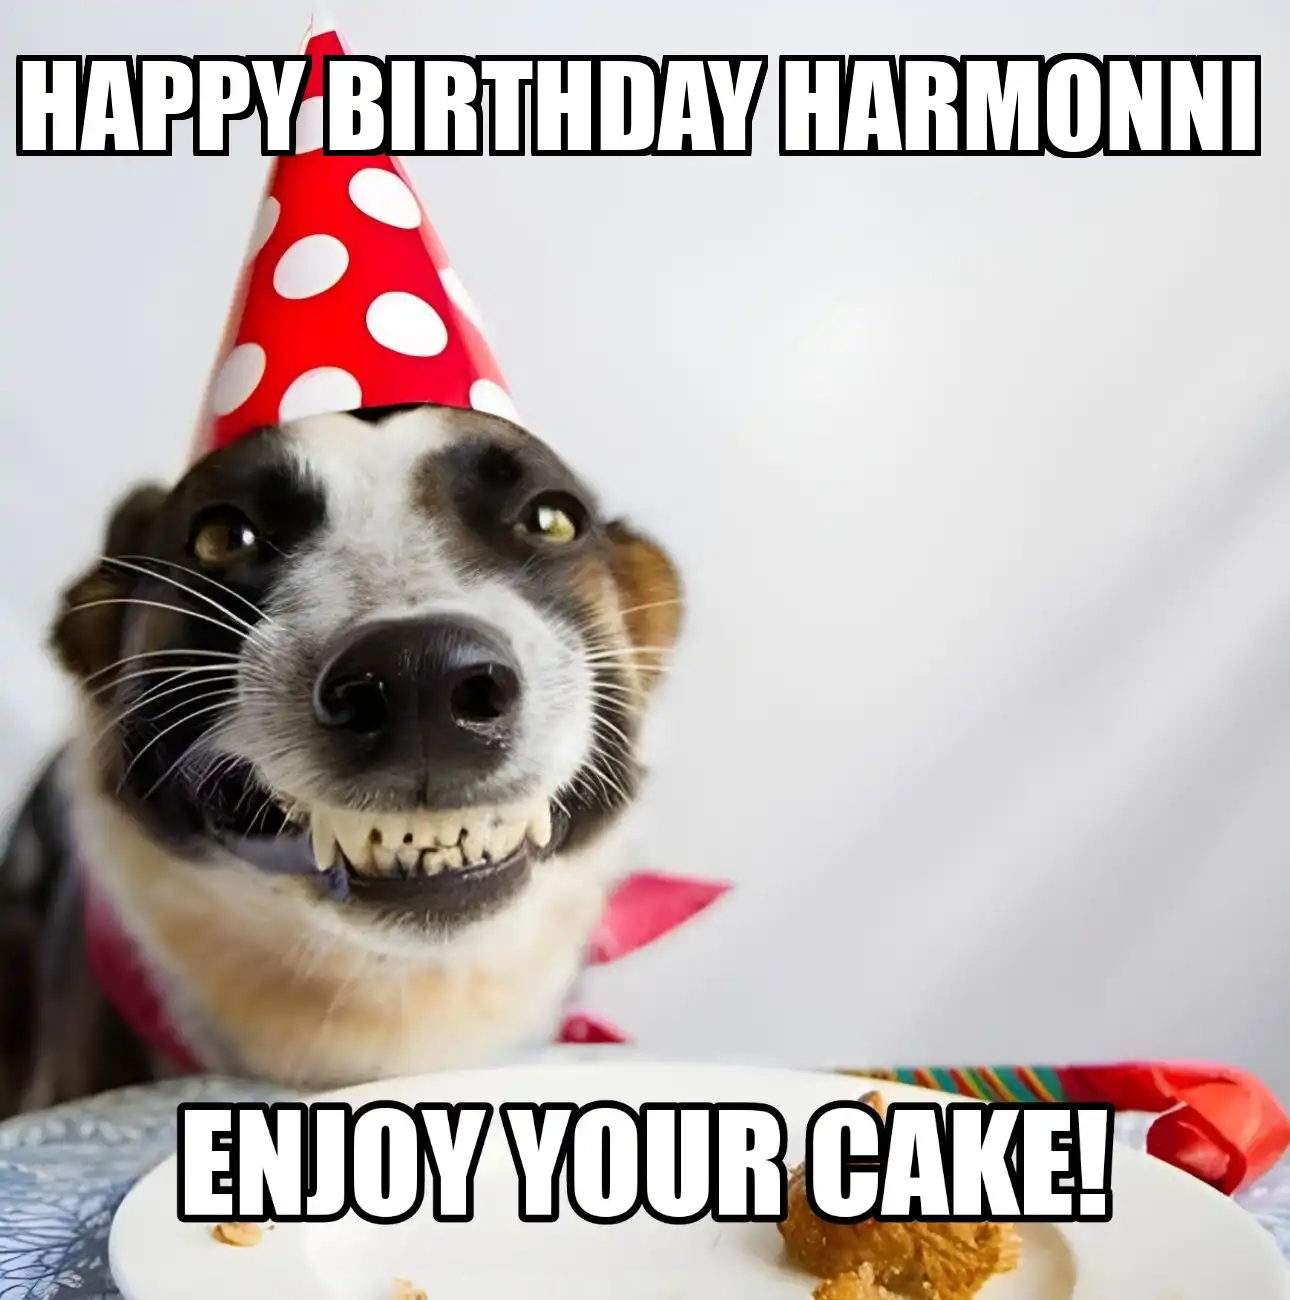 Happy Birthday Harmonni Enjoy Your Cake Dog Meme